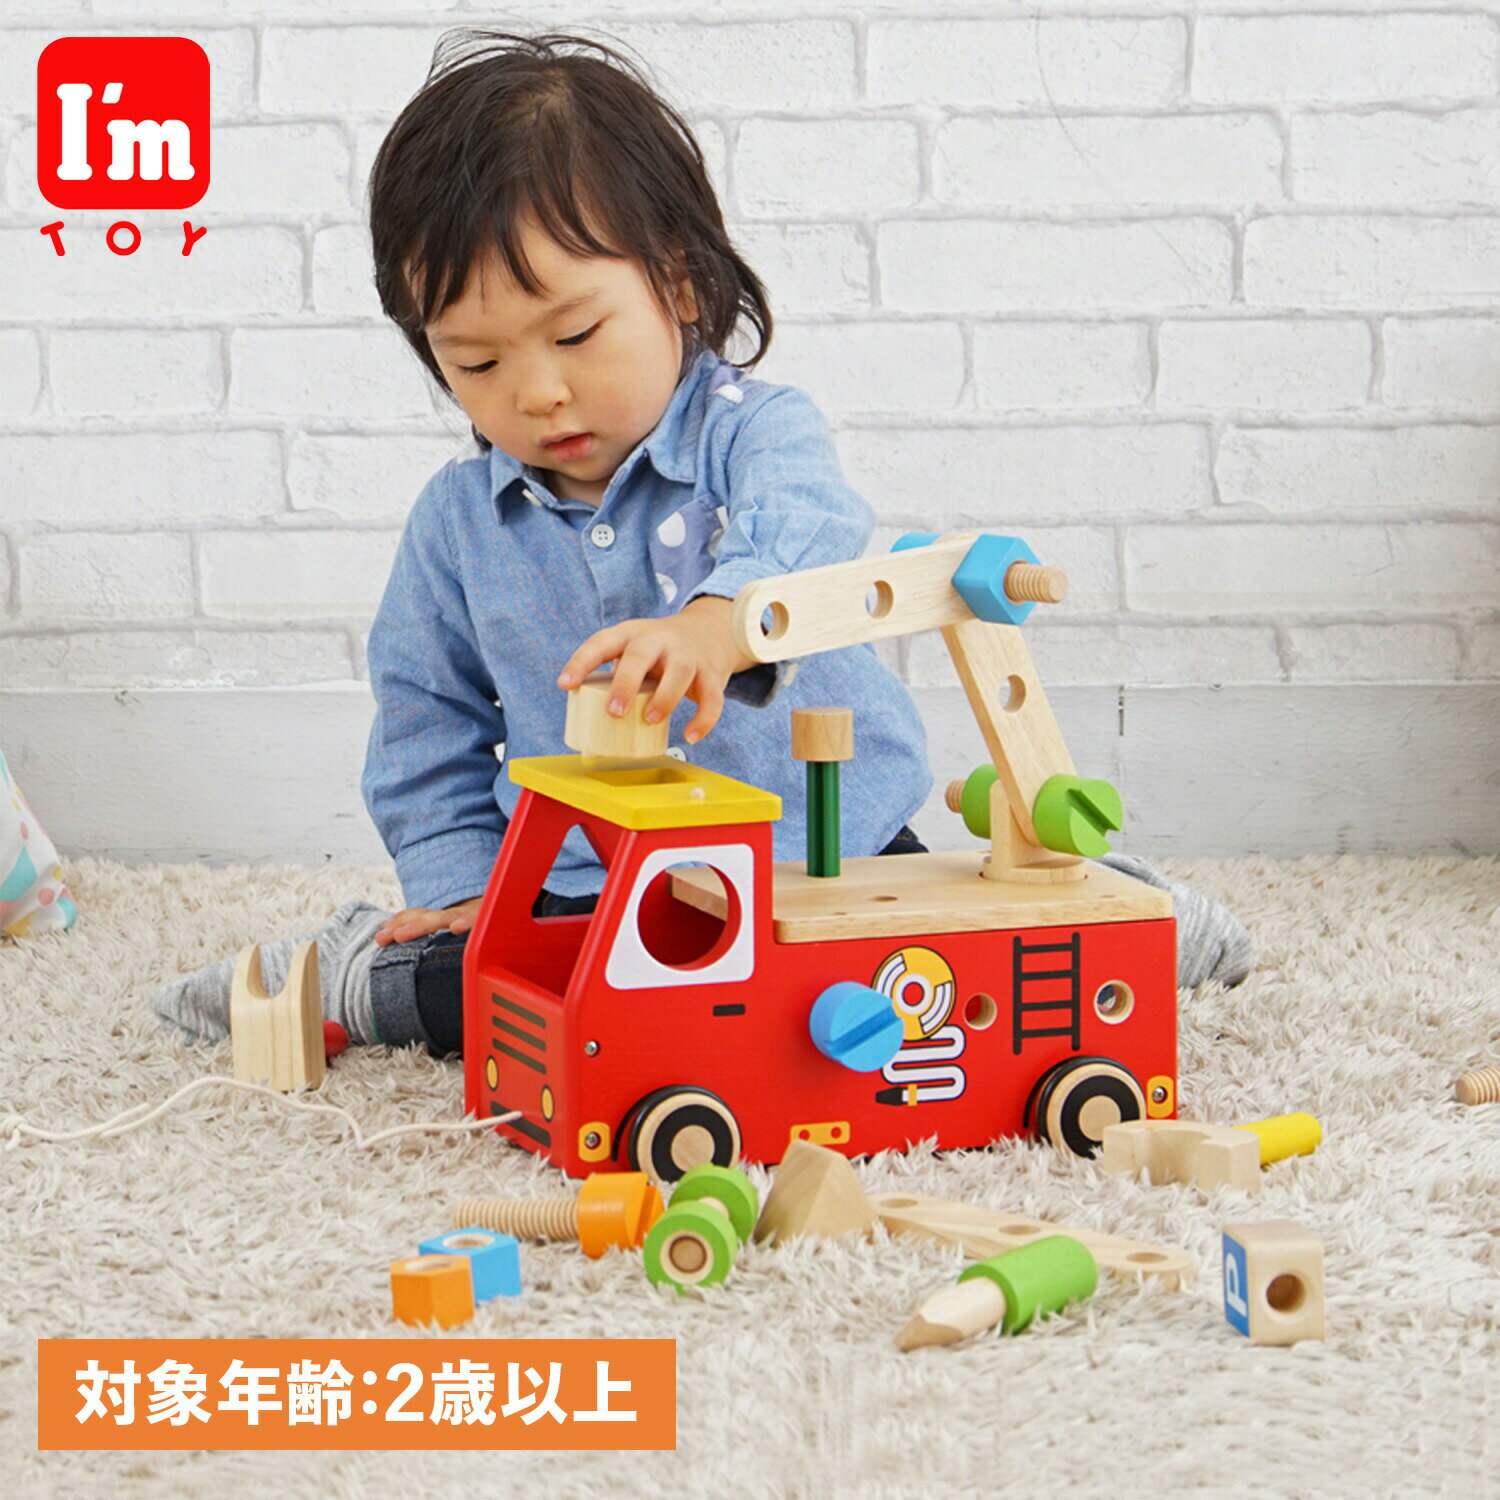 ImTOY アイムトイ 型はめ パズル プルトイ アクティブ消防車 男の子 女の子 2歳から 知育玩具 おもちゃ 木のおもちゃ IM-27050